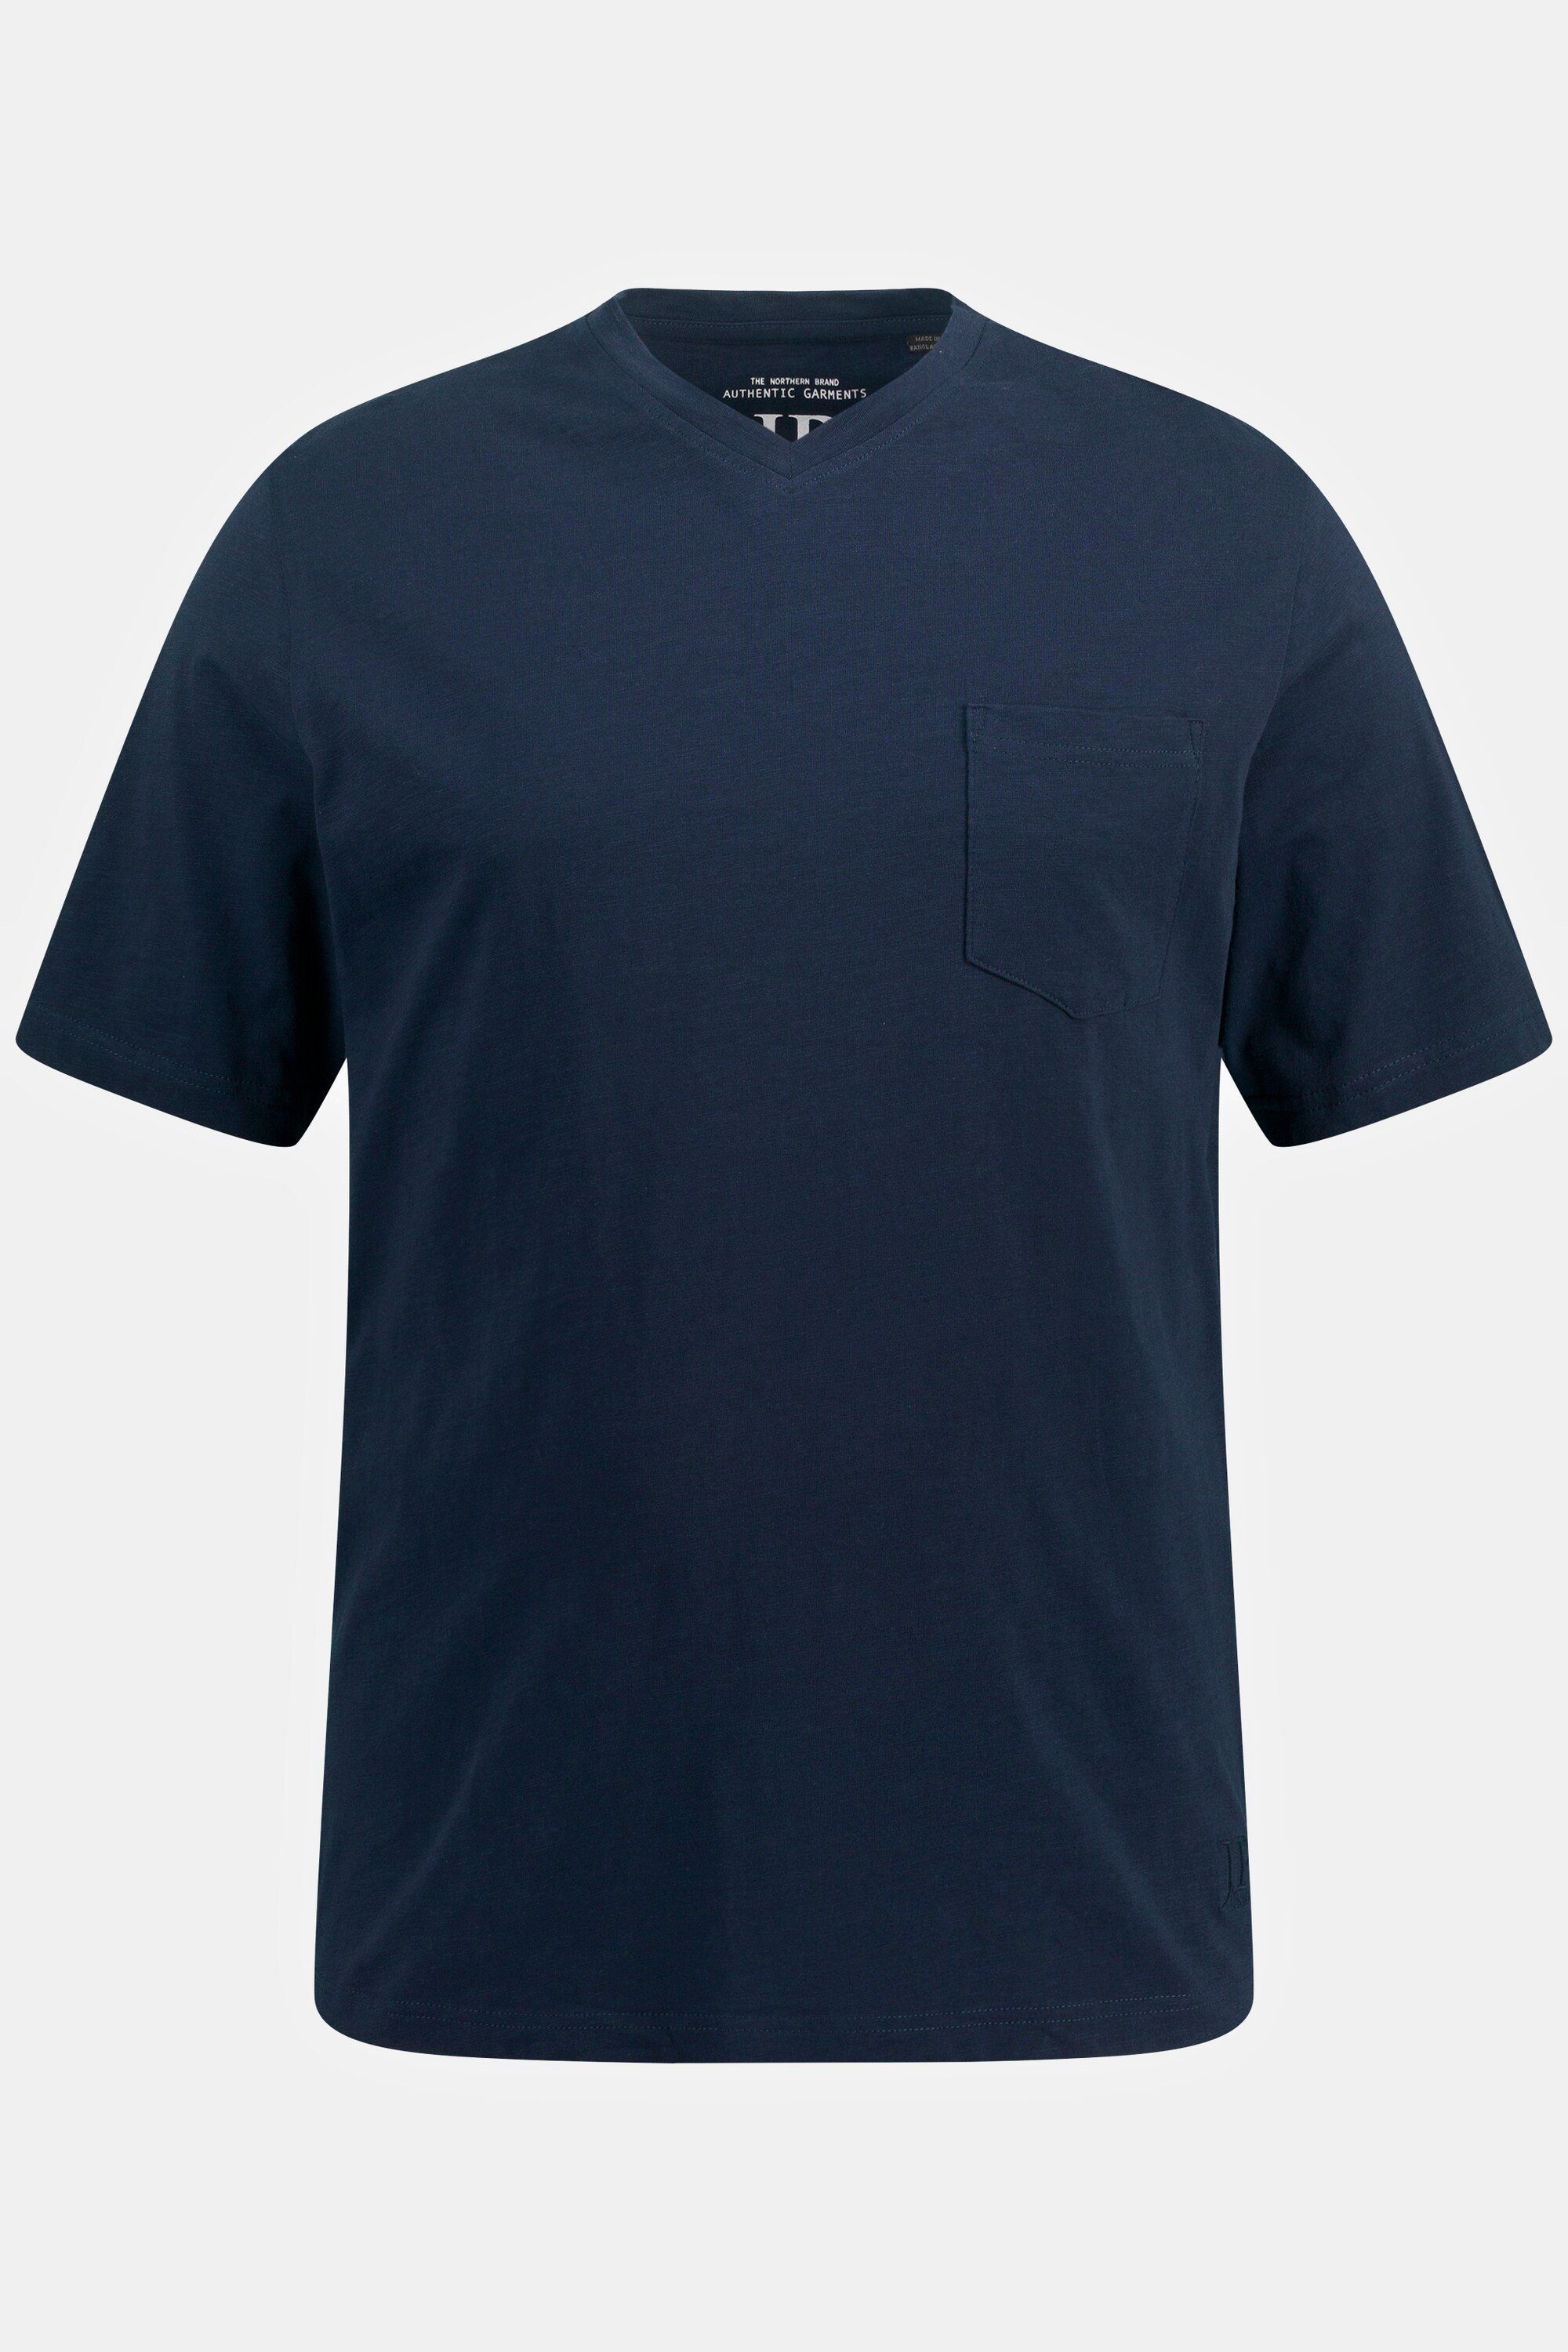 Basic JP1880 T-Shirt blau navy Flammjersey Halbarm V-Ausschnitt T-Shirt